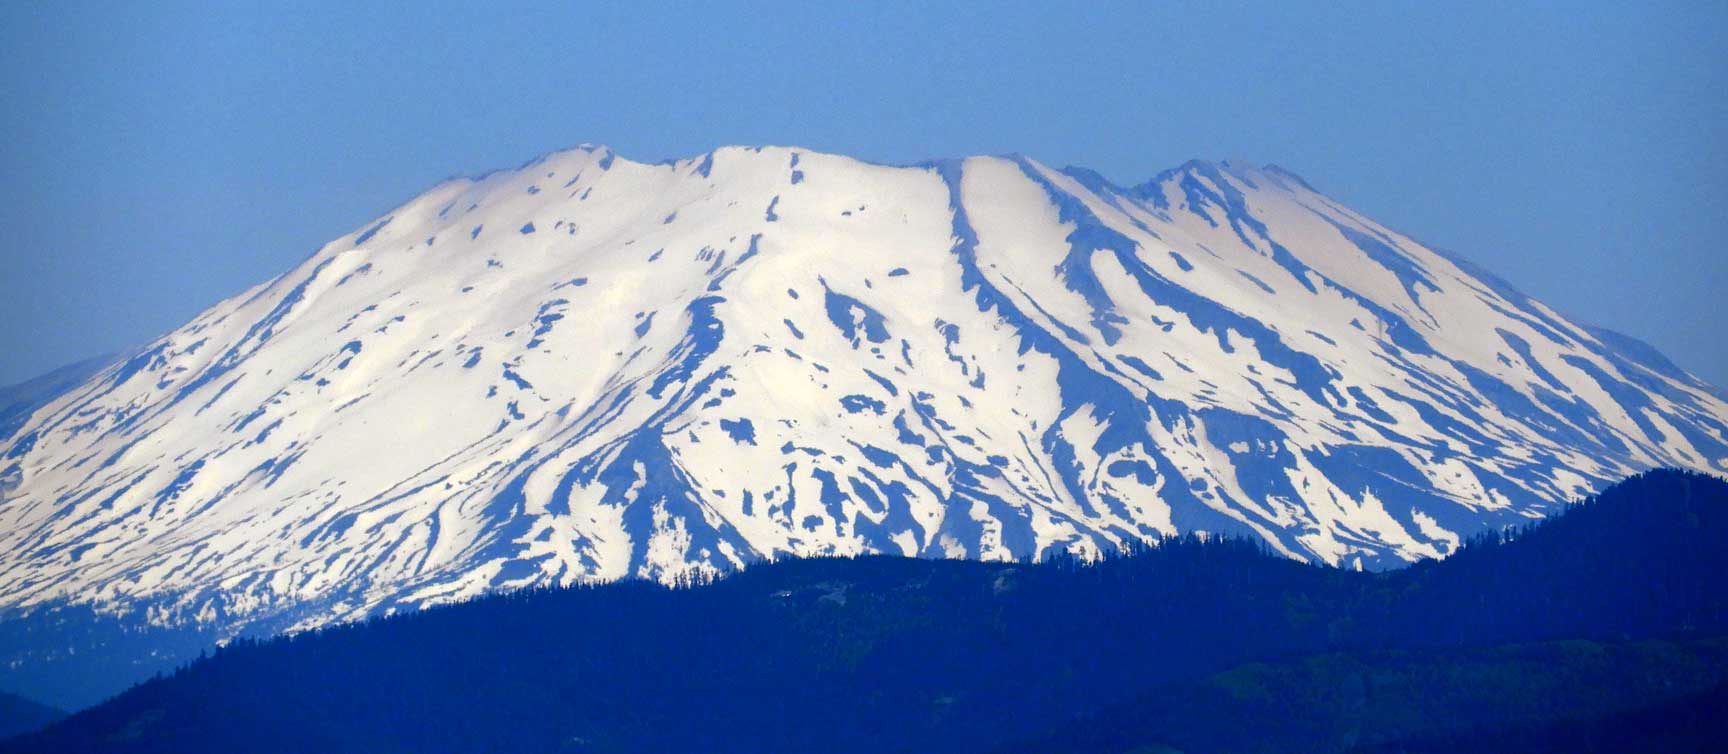 Larch Mountain